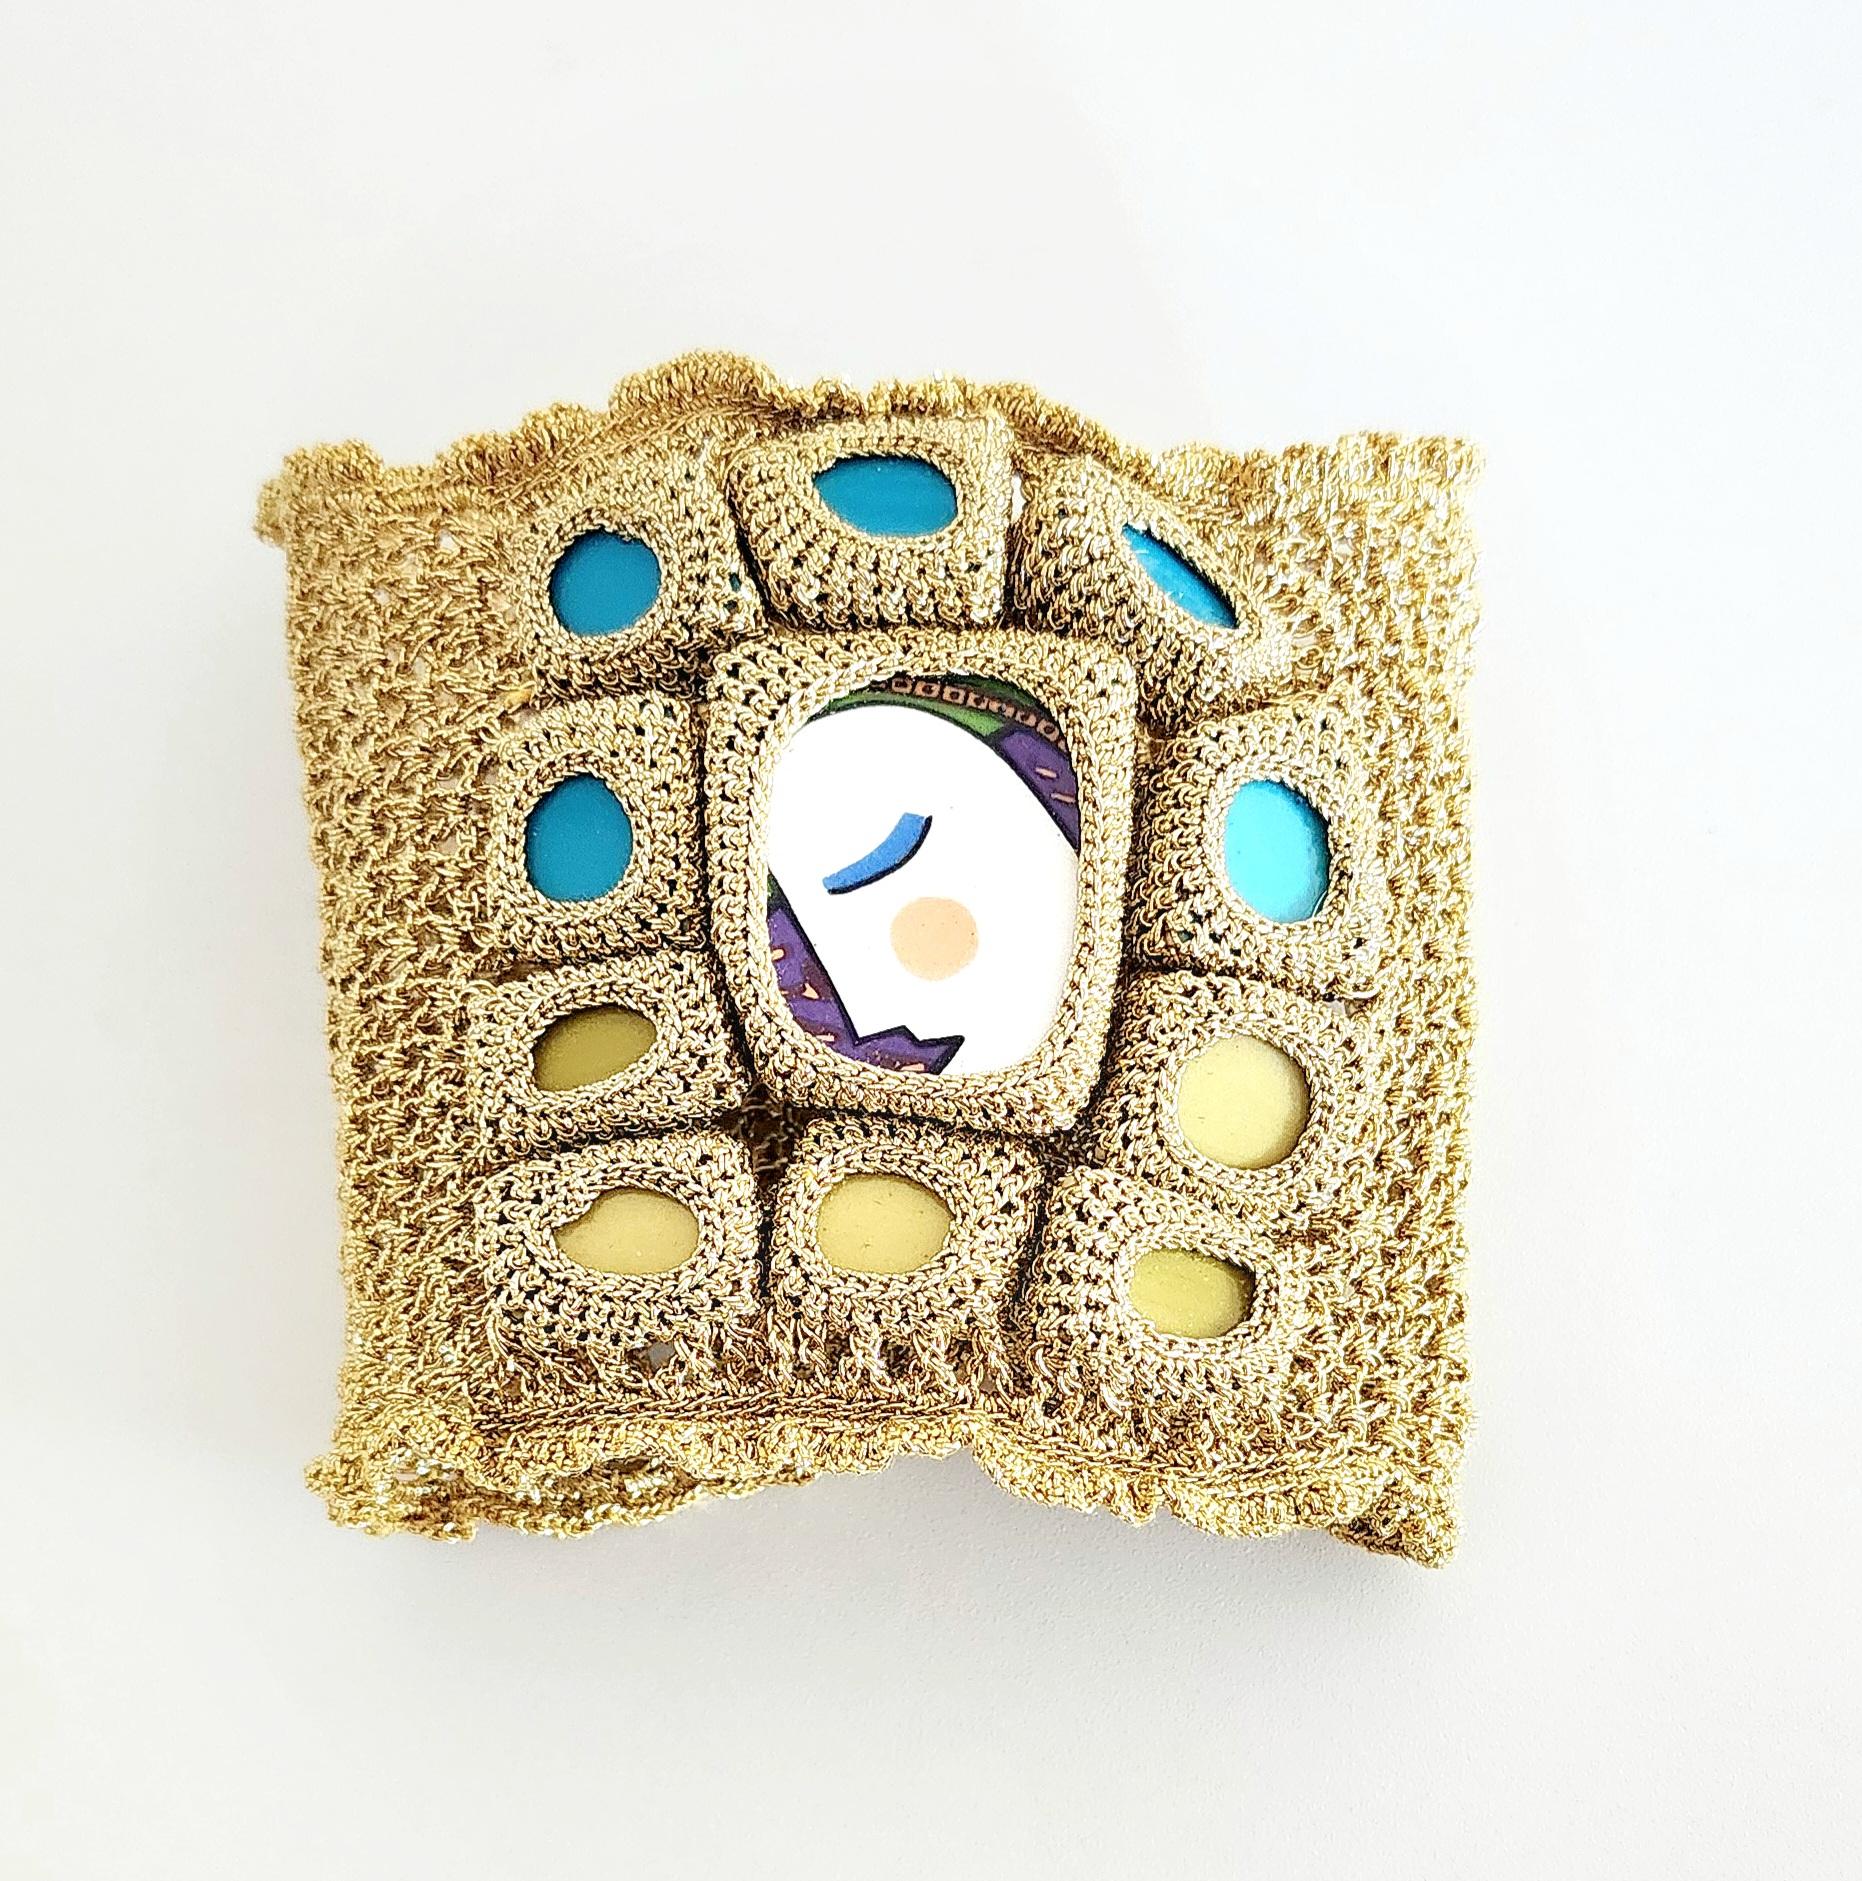 Artisan Kintsugi One Of A Kind Crochet Bracelet Ceramic Tiles Golden Thread For Sale